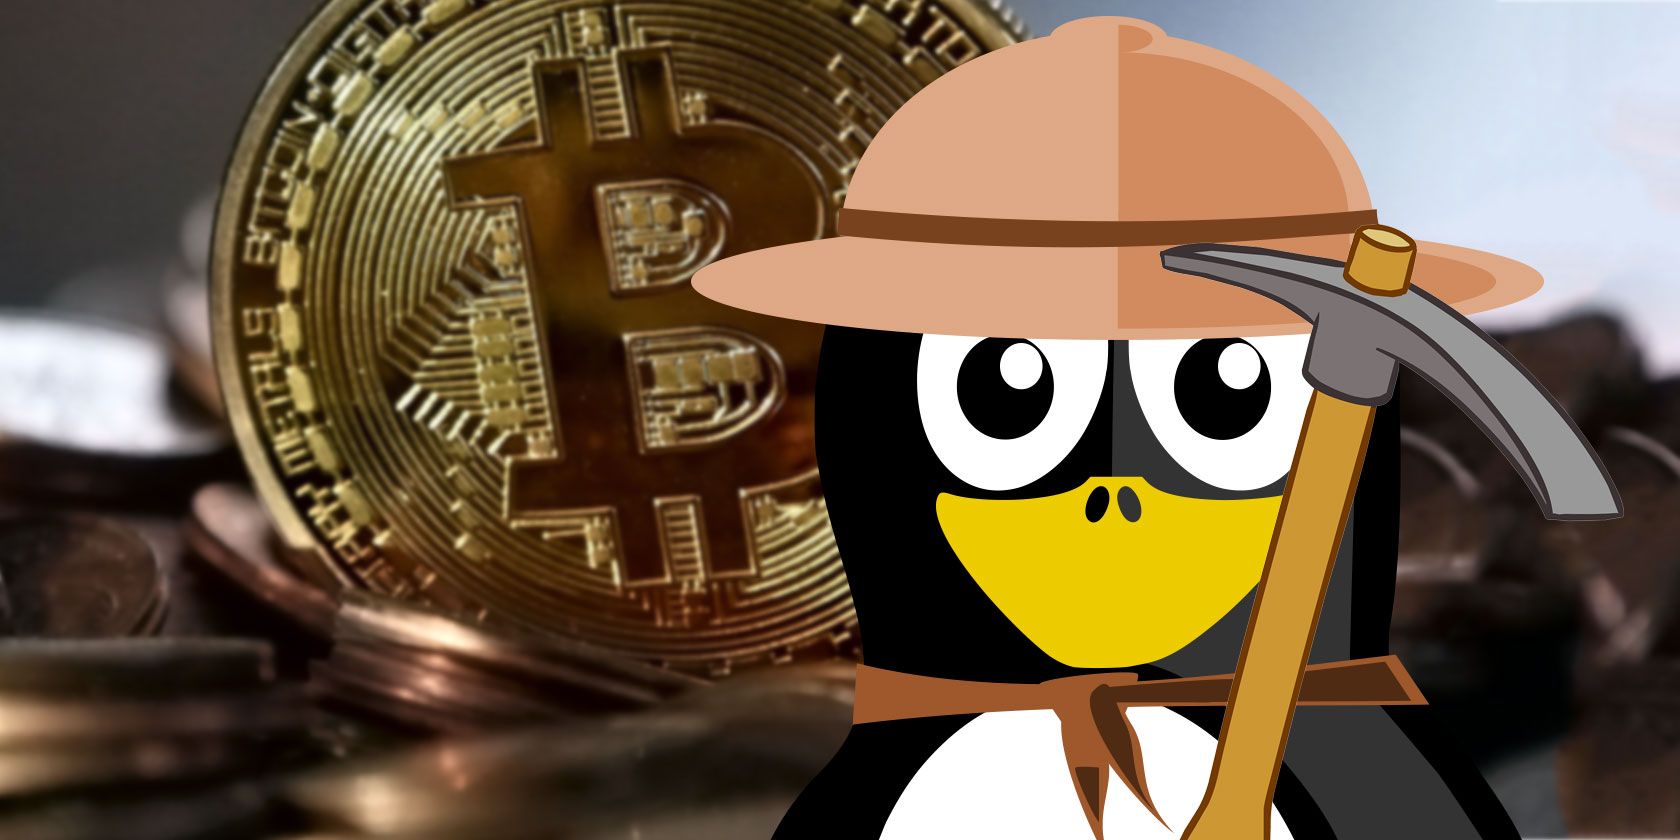 minerando bitcoins linux software